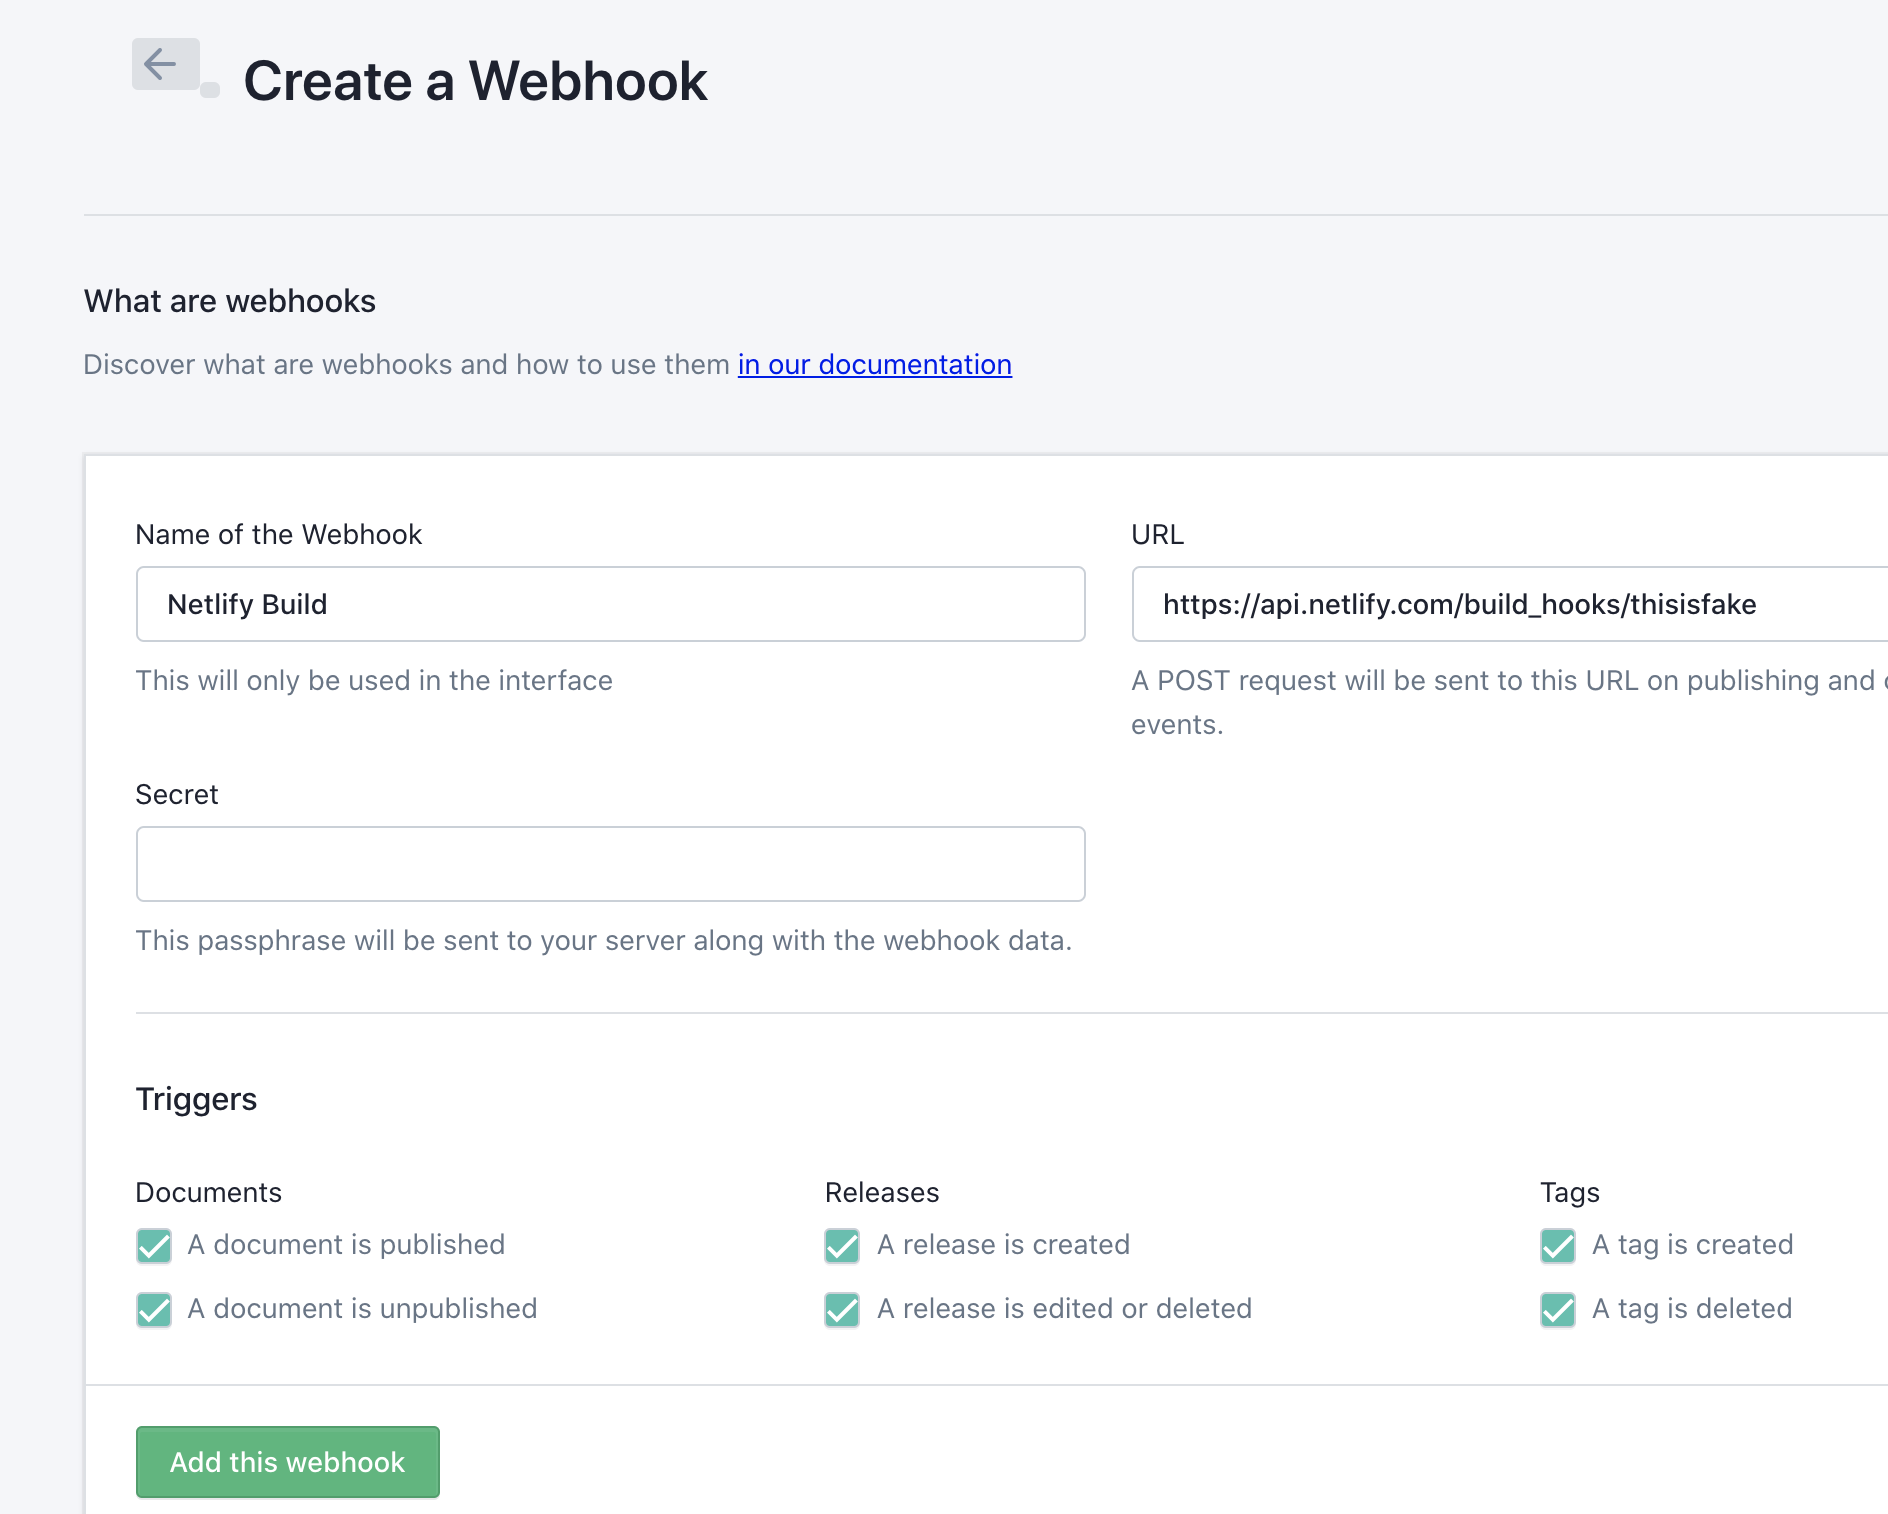 Create a new webhook